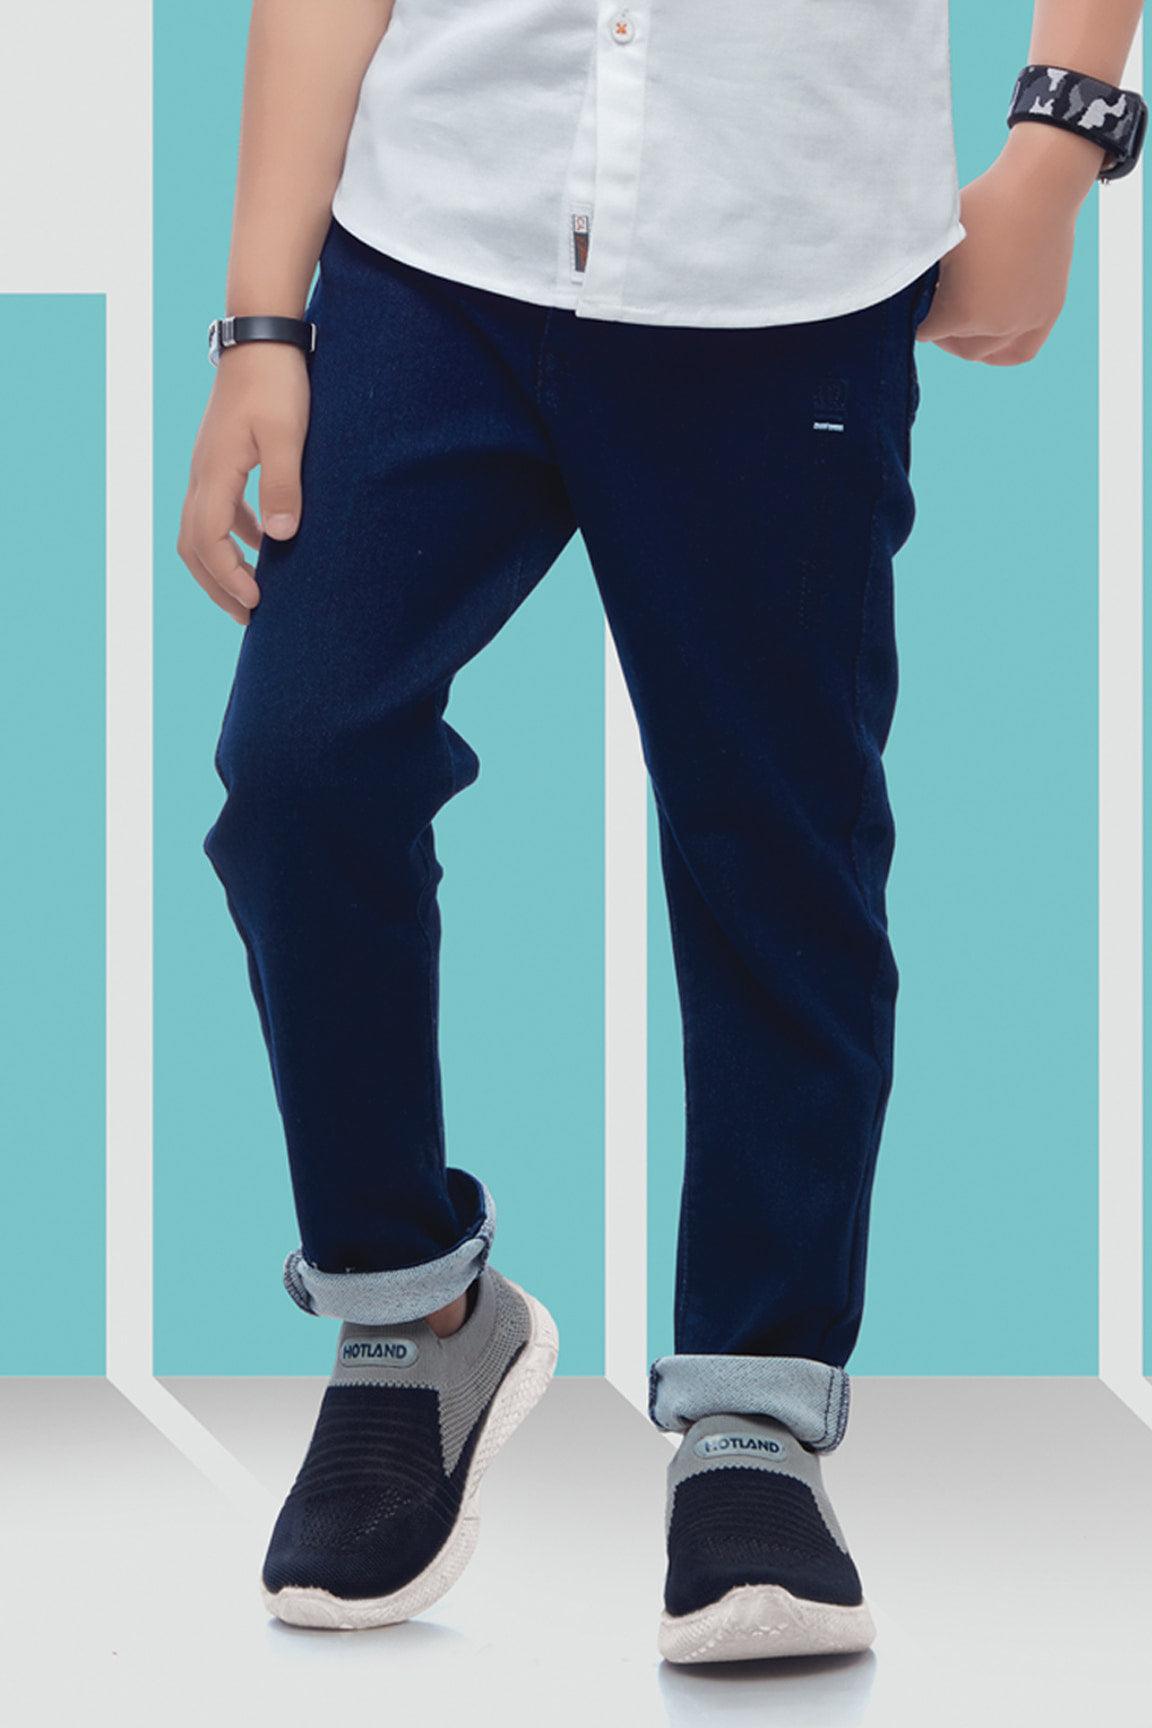 Stylish White Shirt and Blue Pant Set For Boys - Lagorii Kids